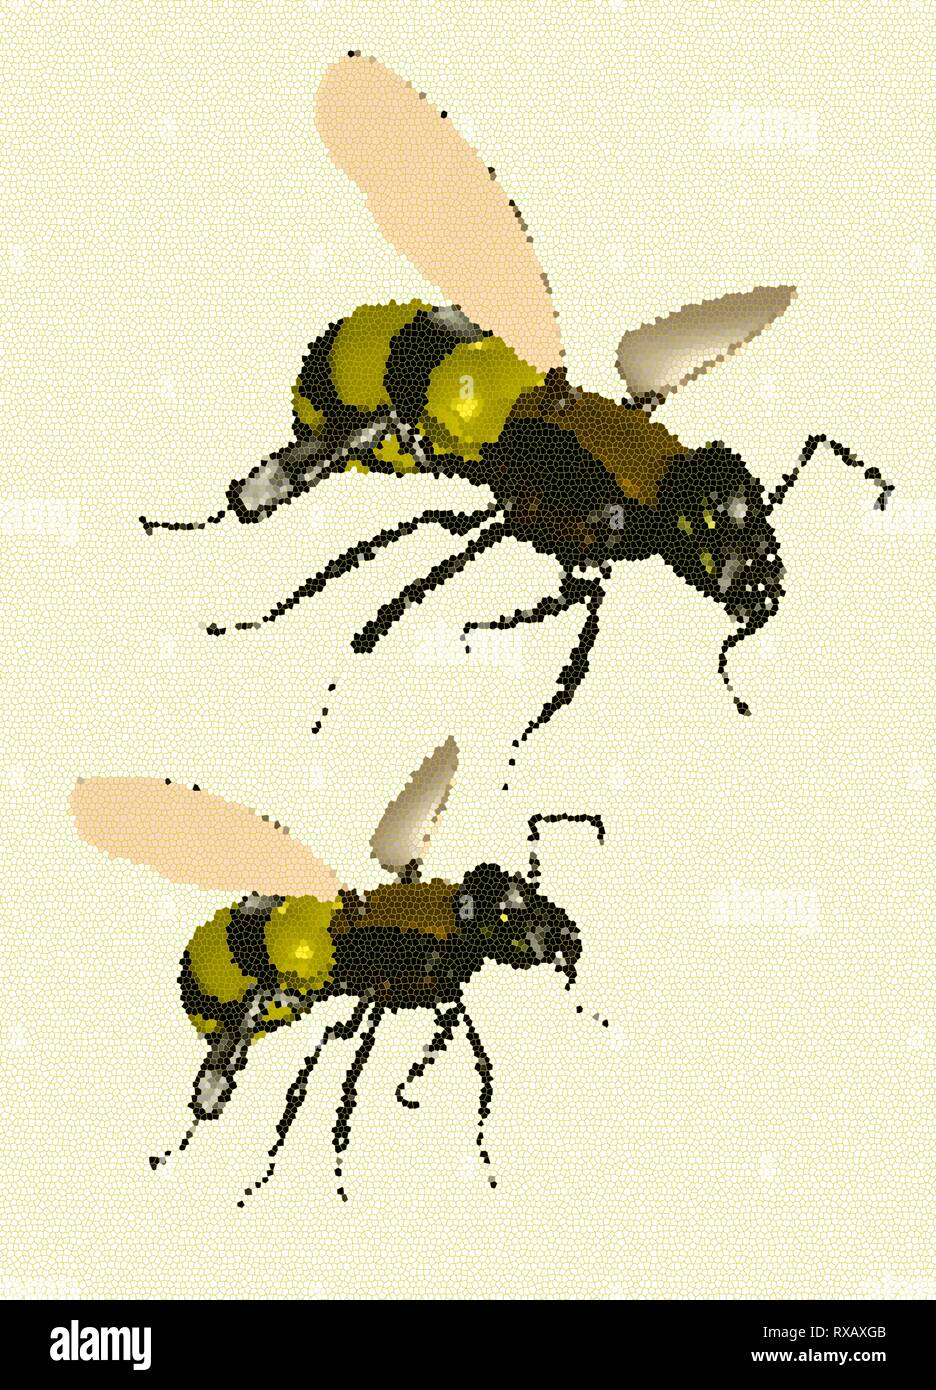 Bees, illustration Stock Photo